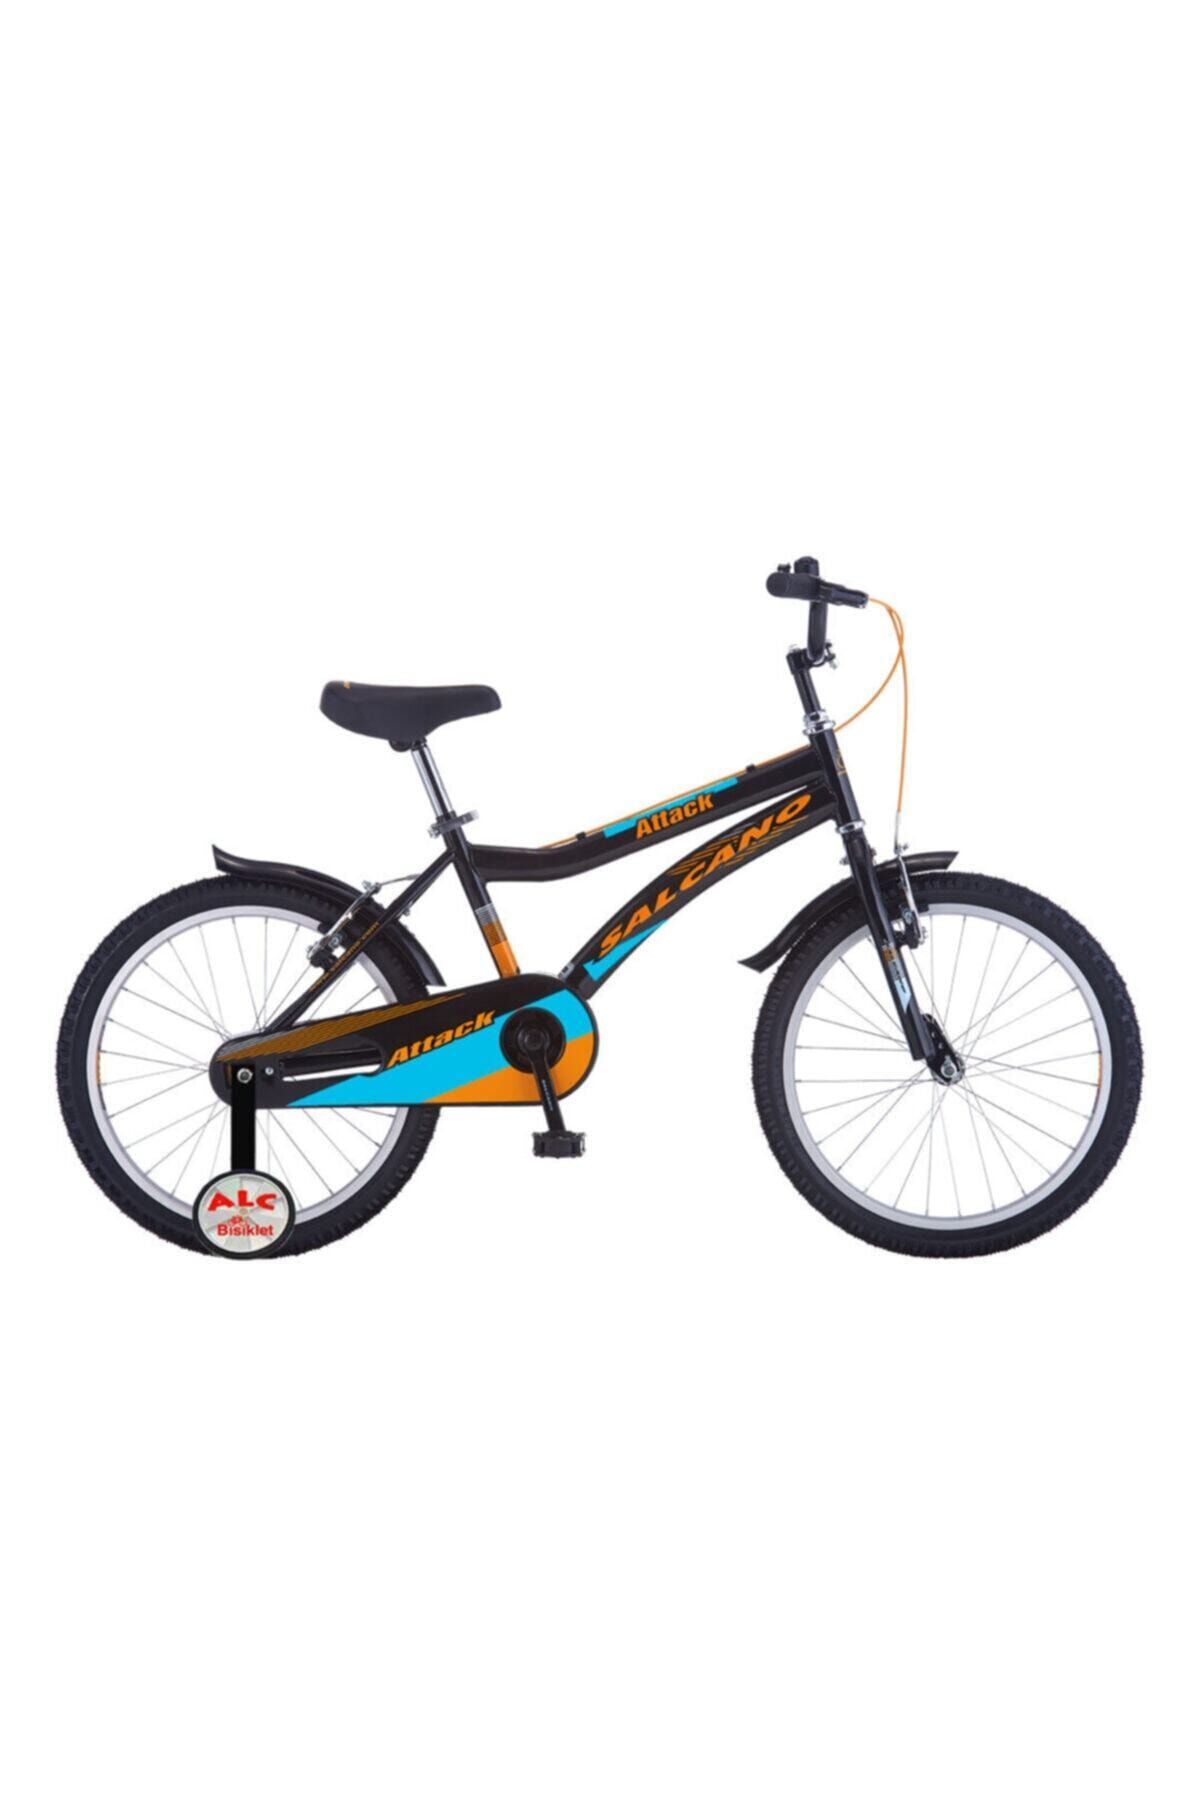 Salcano Erkek Çocuk Siyah Turuncu Attack Bisikleti 120x140 cm 20 Jant